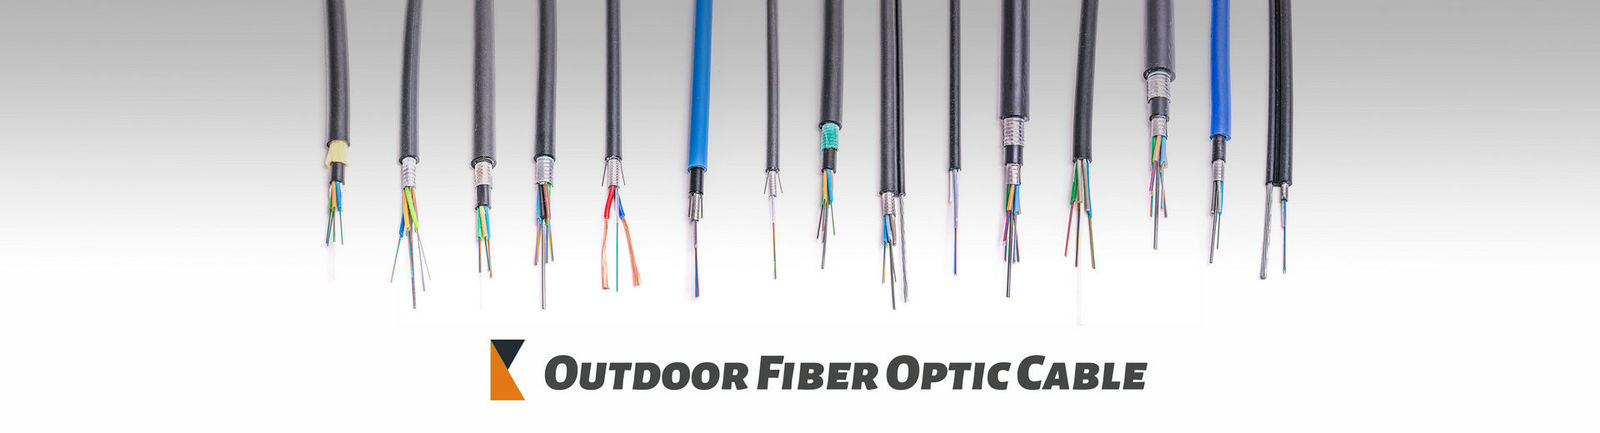 Cable de fribra óptica al aire libre